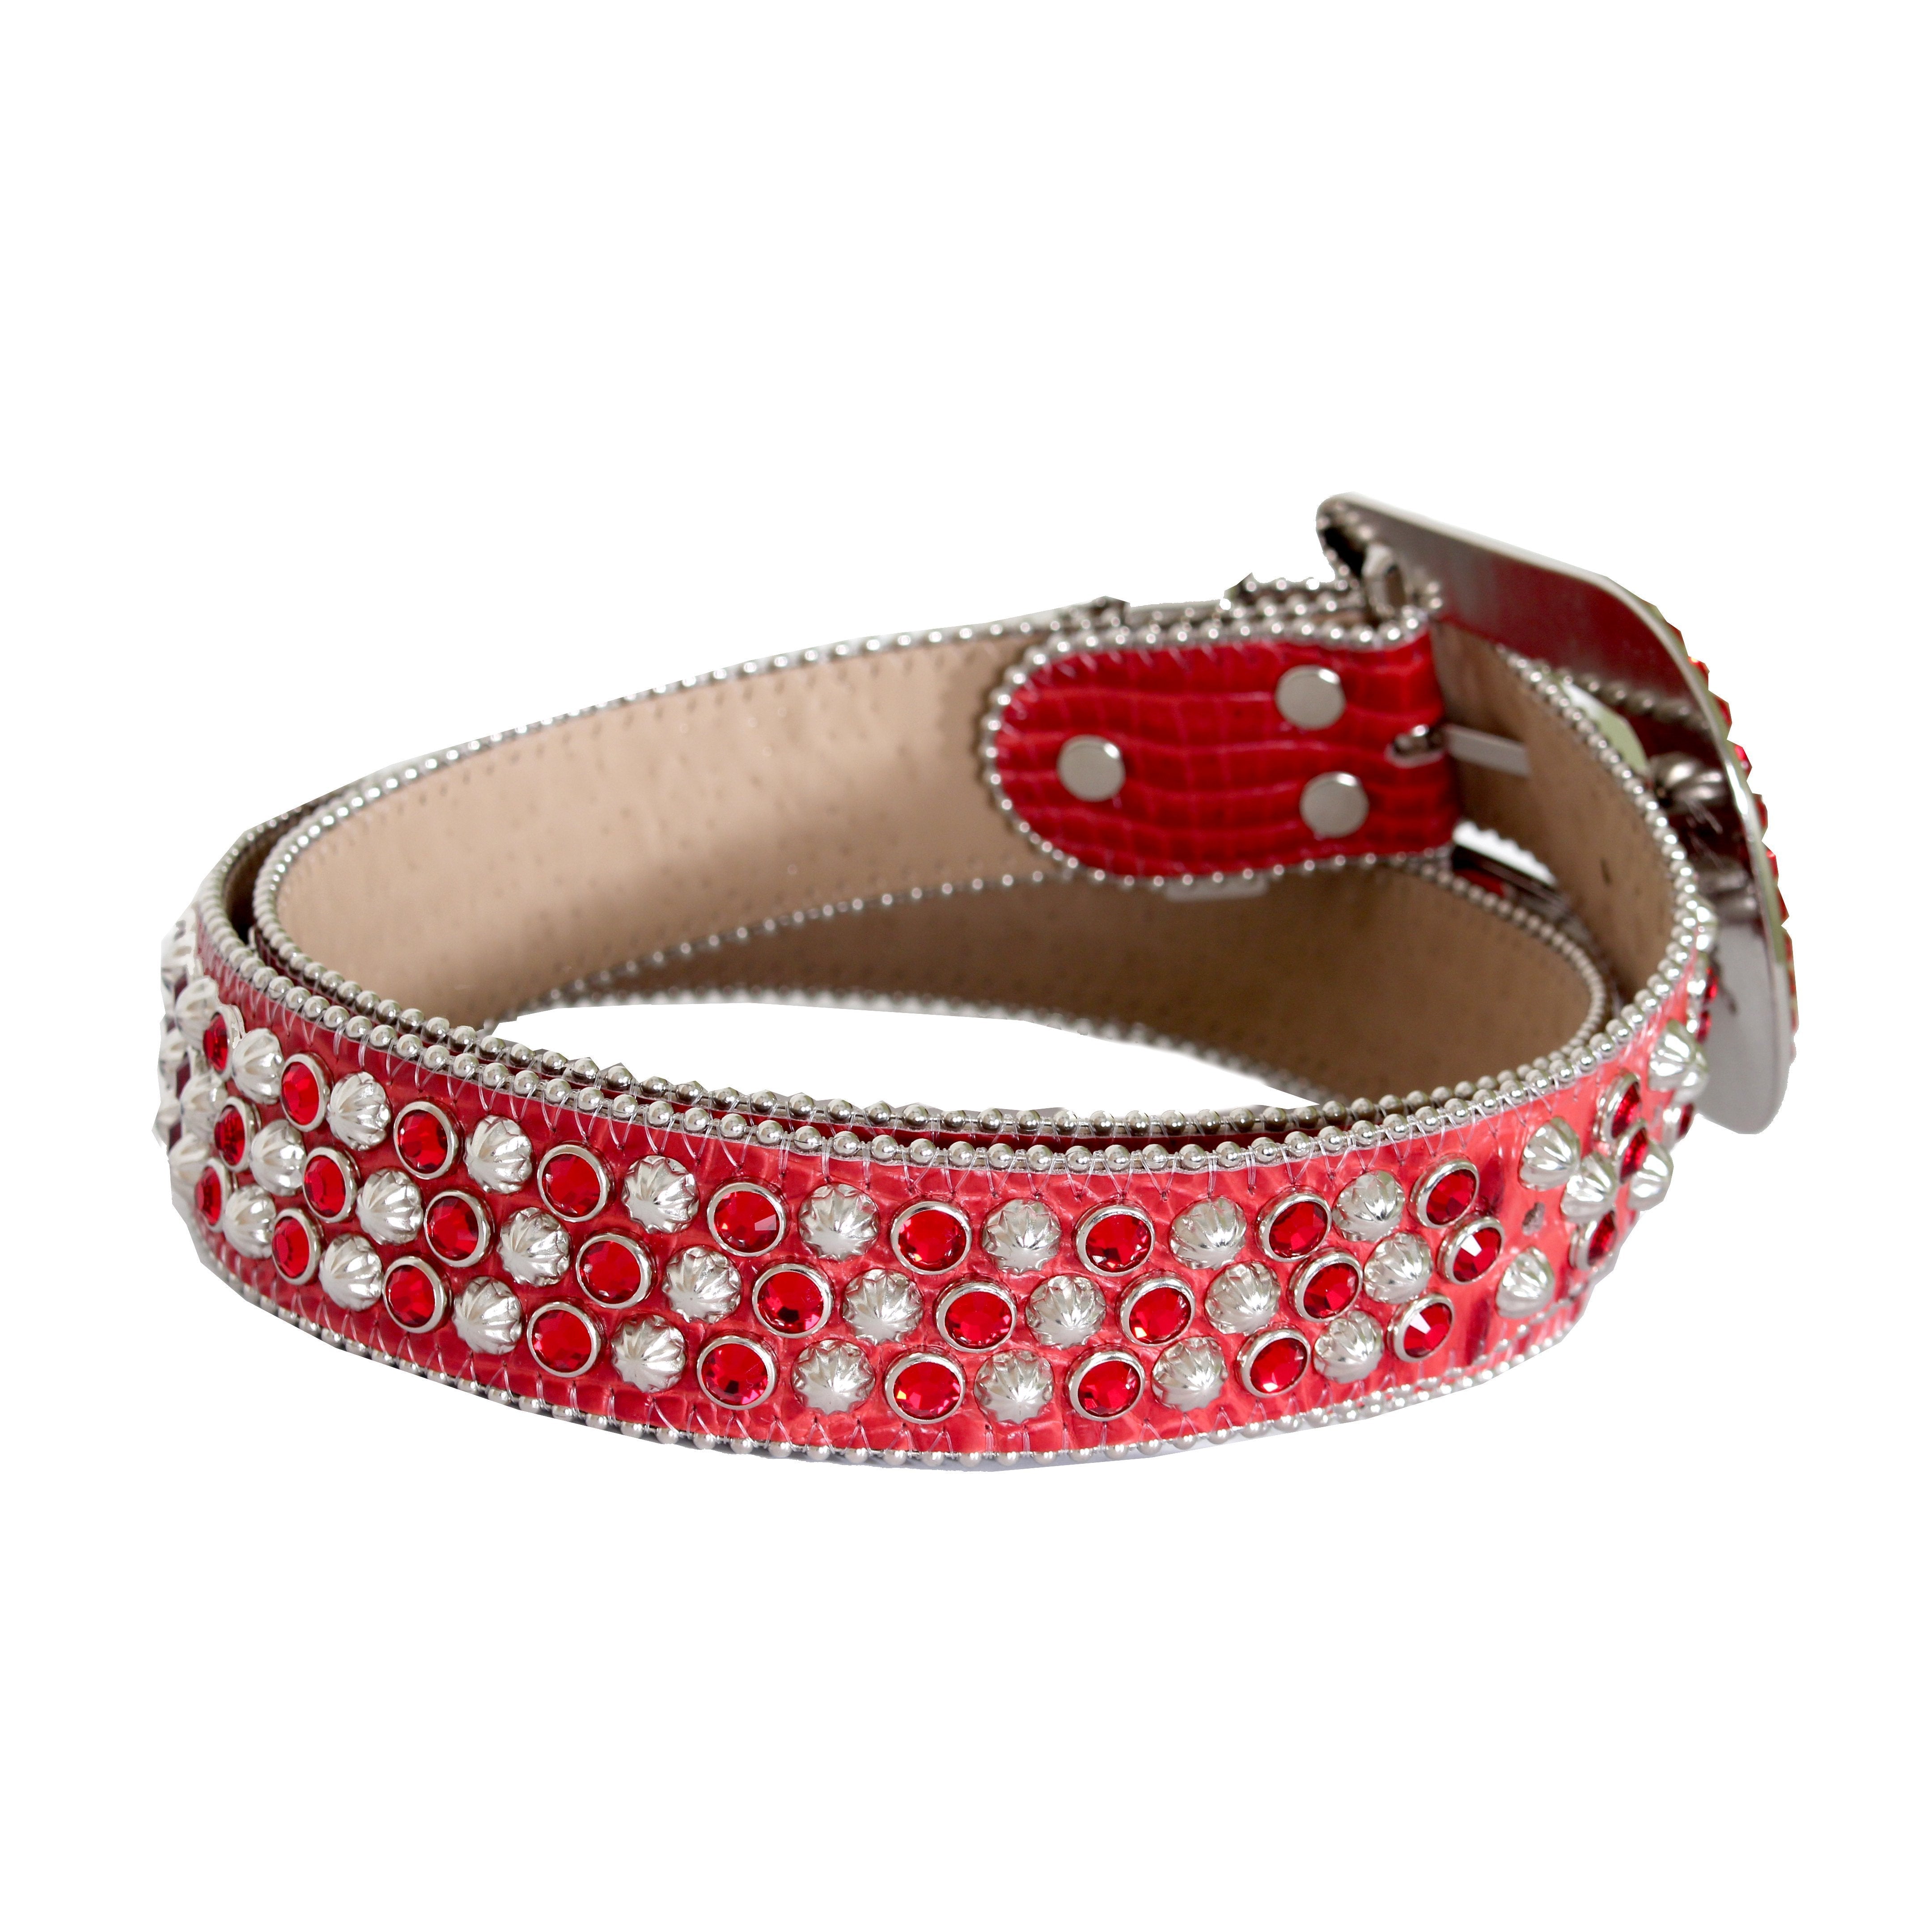 Supreme x B.B. Simon Wide Waist Belt - Red Belts, Accessories - WSPME41255